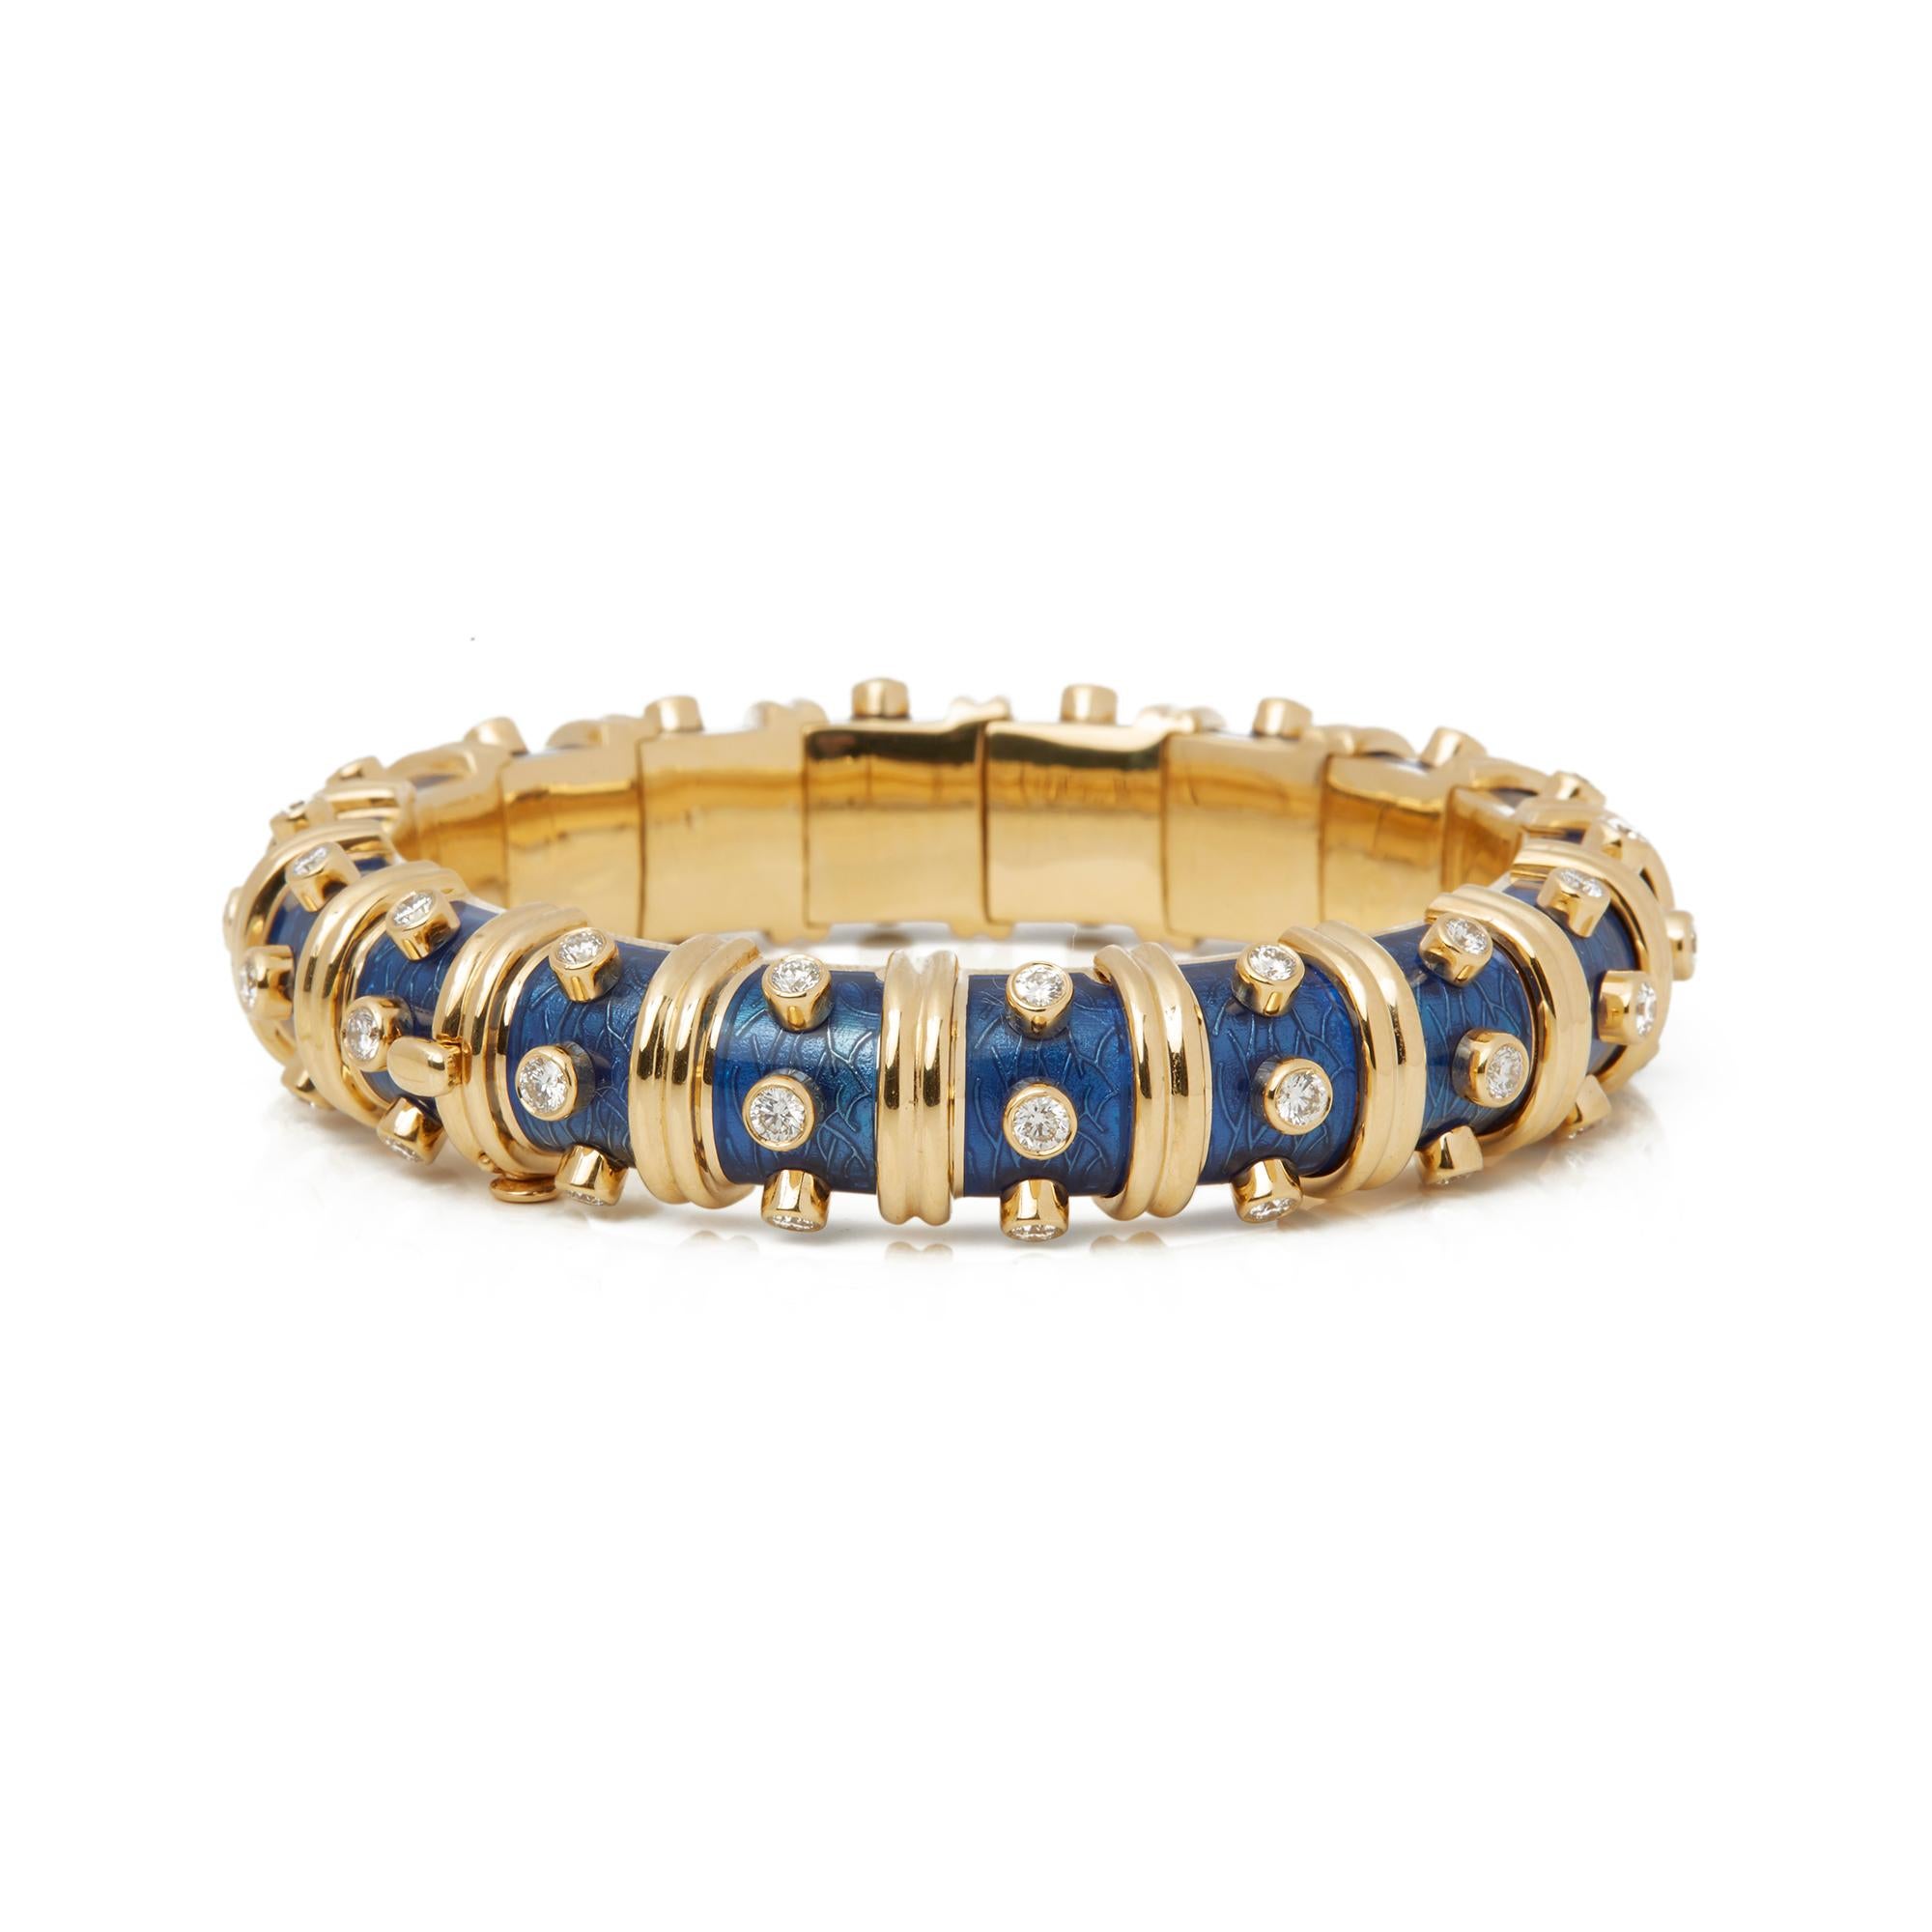 Code: COM2046
Brand: Tiffany & Co.
Description: 18k Yellow Gold Diamond & Blue Enamel Schlumberger Bracelet
Accompanied With: Box Only
Gender: Ladies
Bracelet Length: 17cm
Bracelet Width: 1.3cm
Clasp Type: Push Button
Condition: 9
Material: Yellow